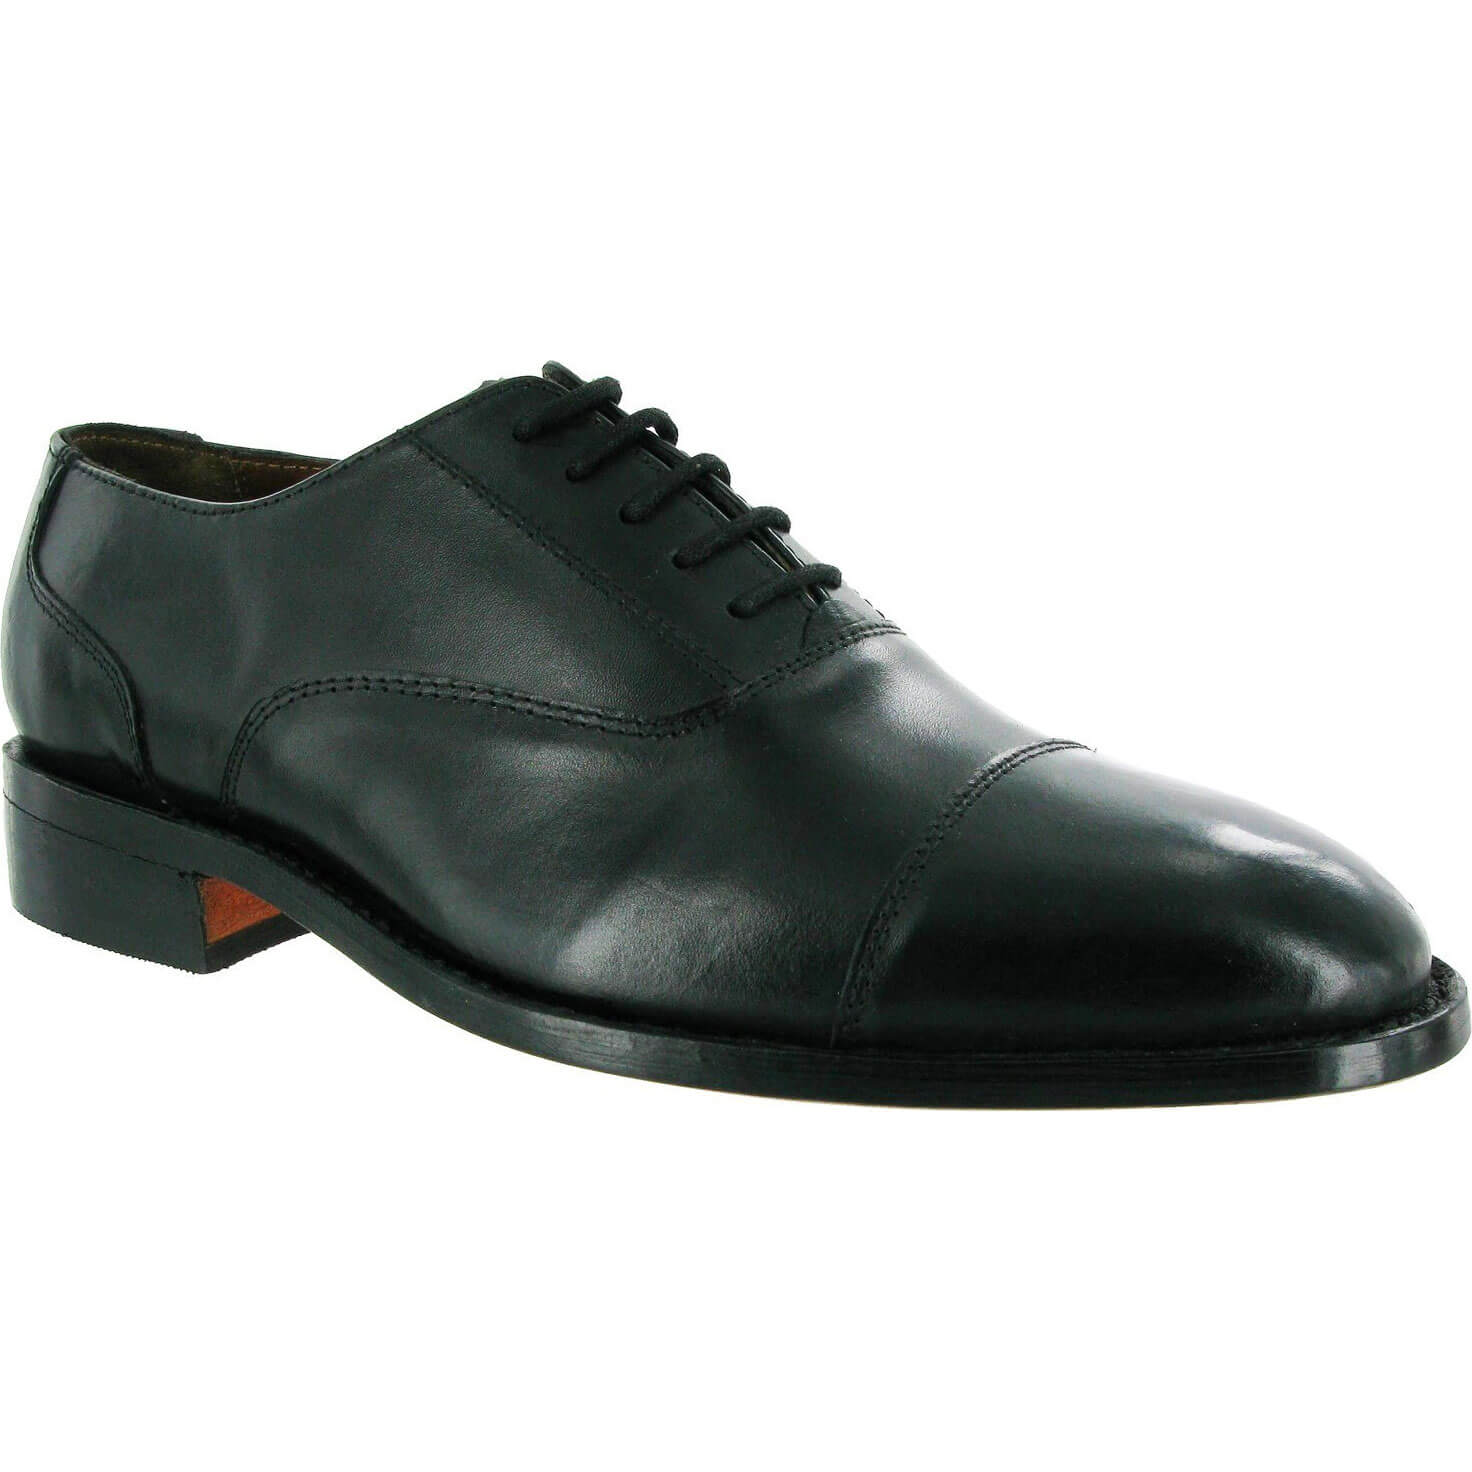 Image of Amblers James Leather Soled Oxford Dress Shoe Black Size 14